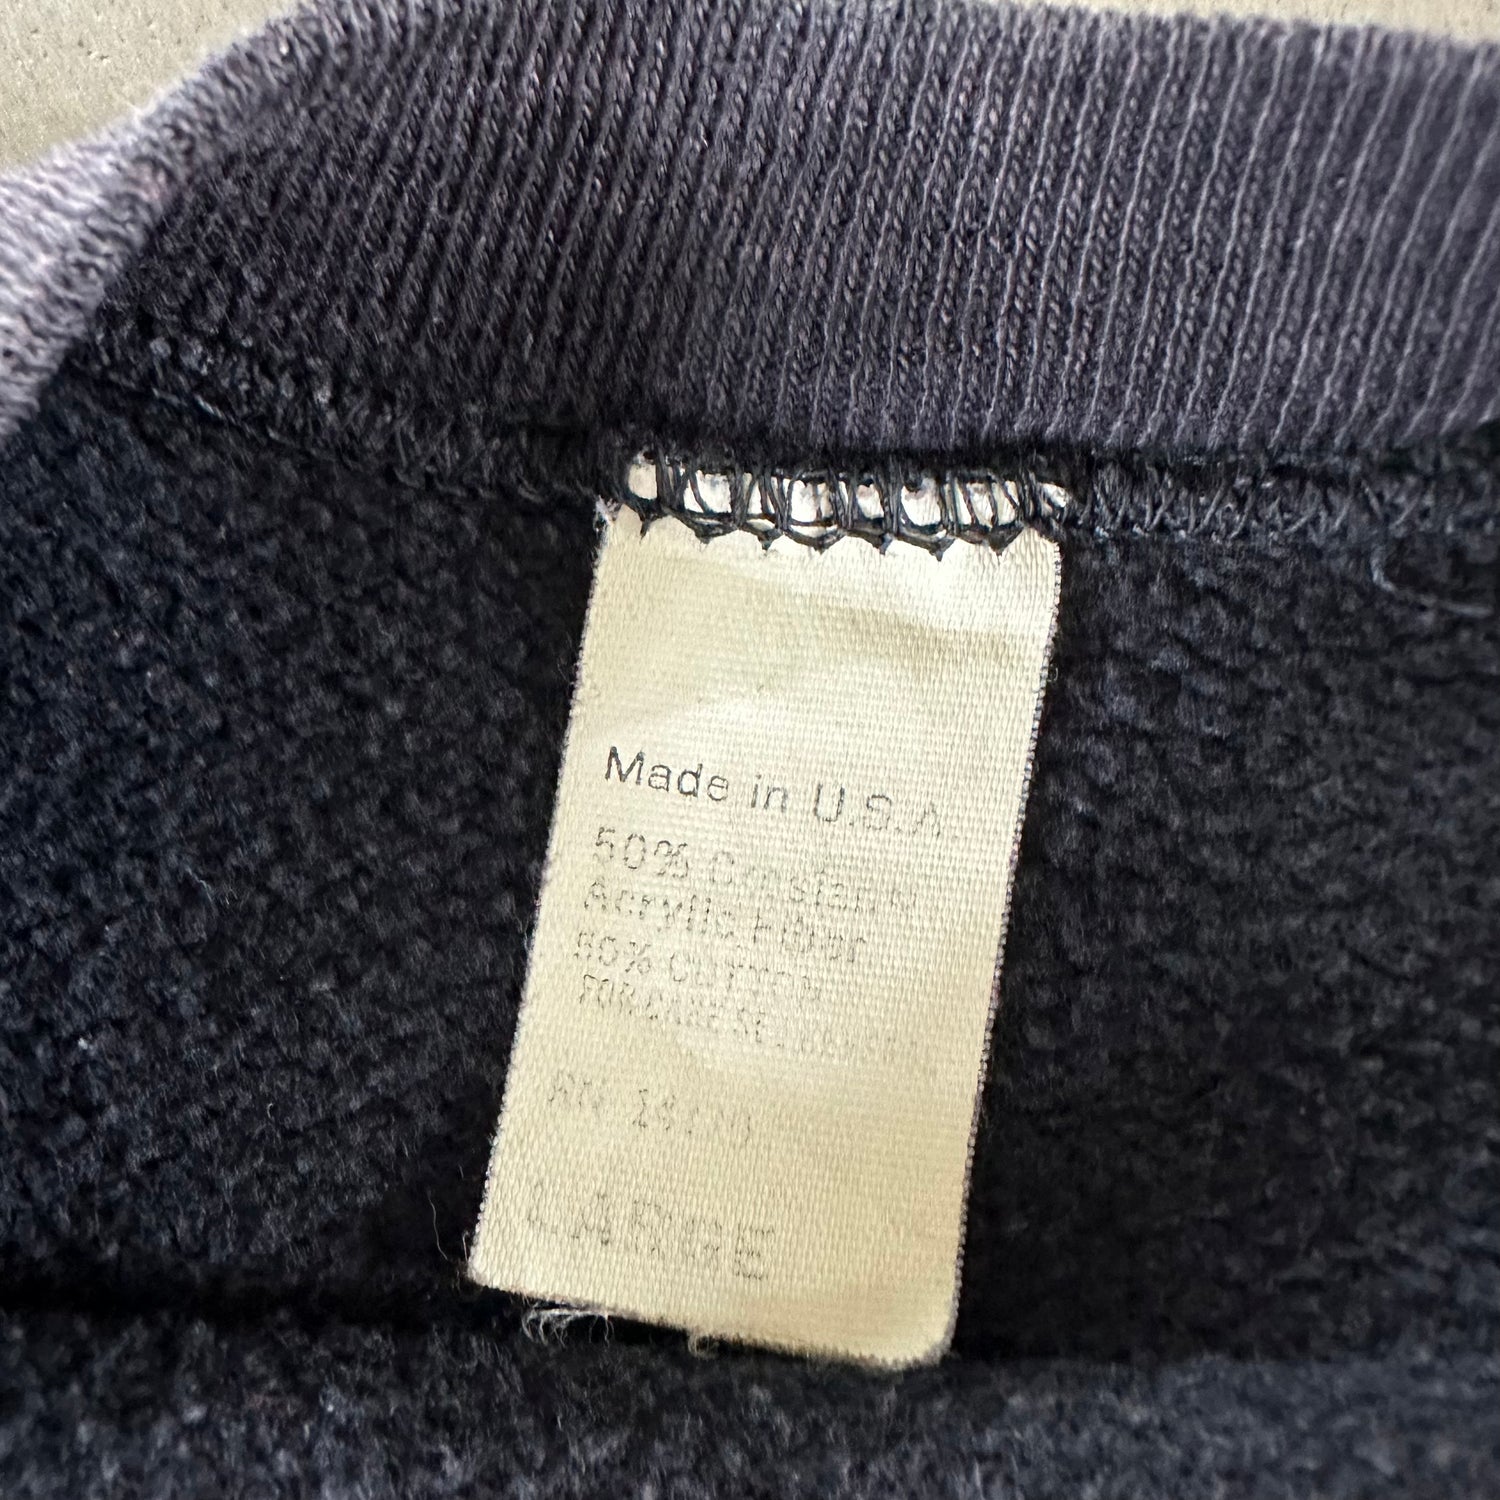 Vintage 1970s Sachem Sweatshirt size Large